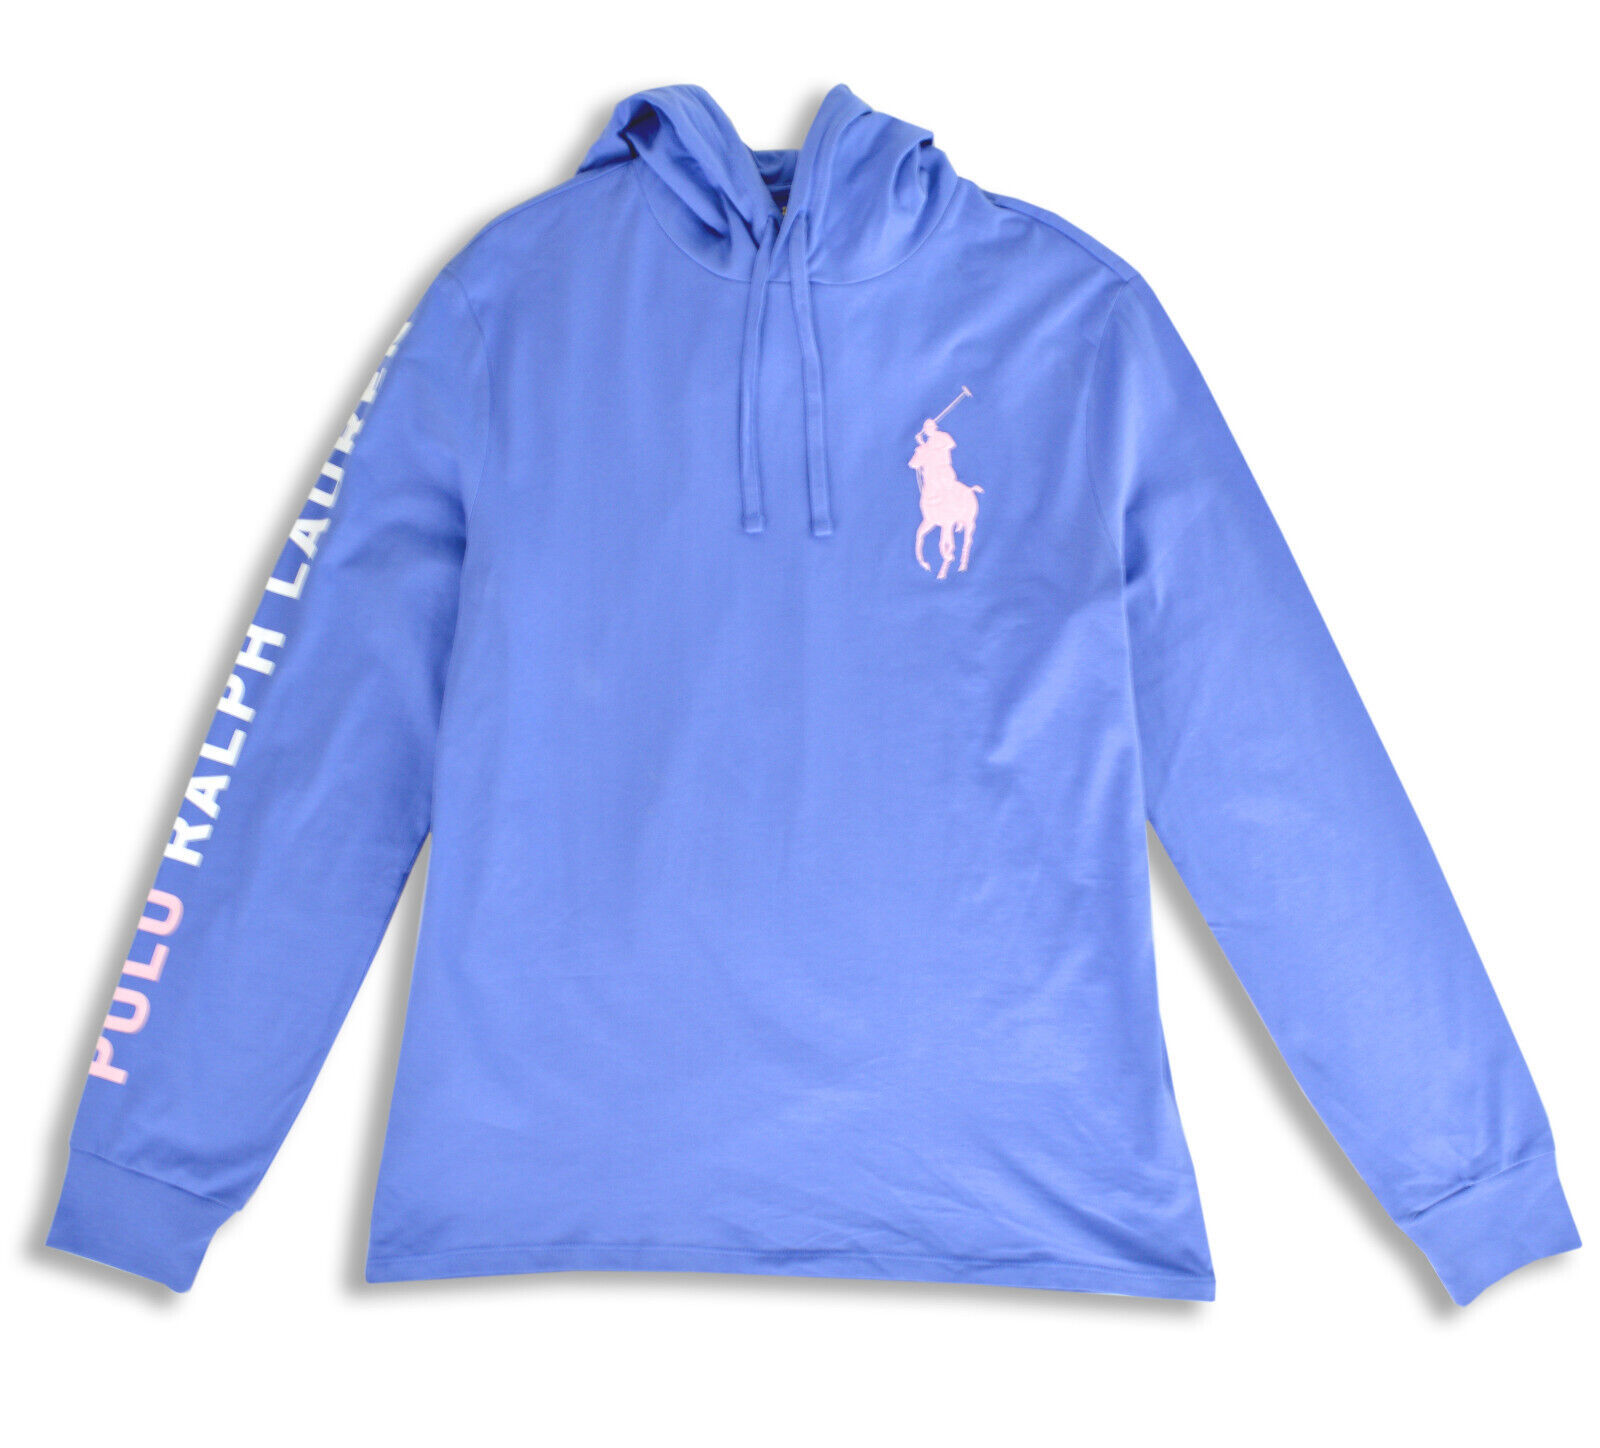 Primary image for Polo Ralph Lauren Blue Pink Big Pony Light Sweater Hoodie, M Medium, 7586-6